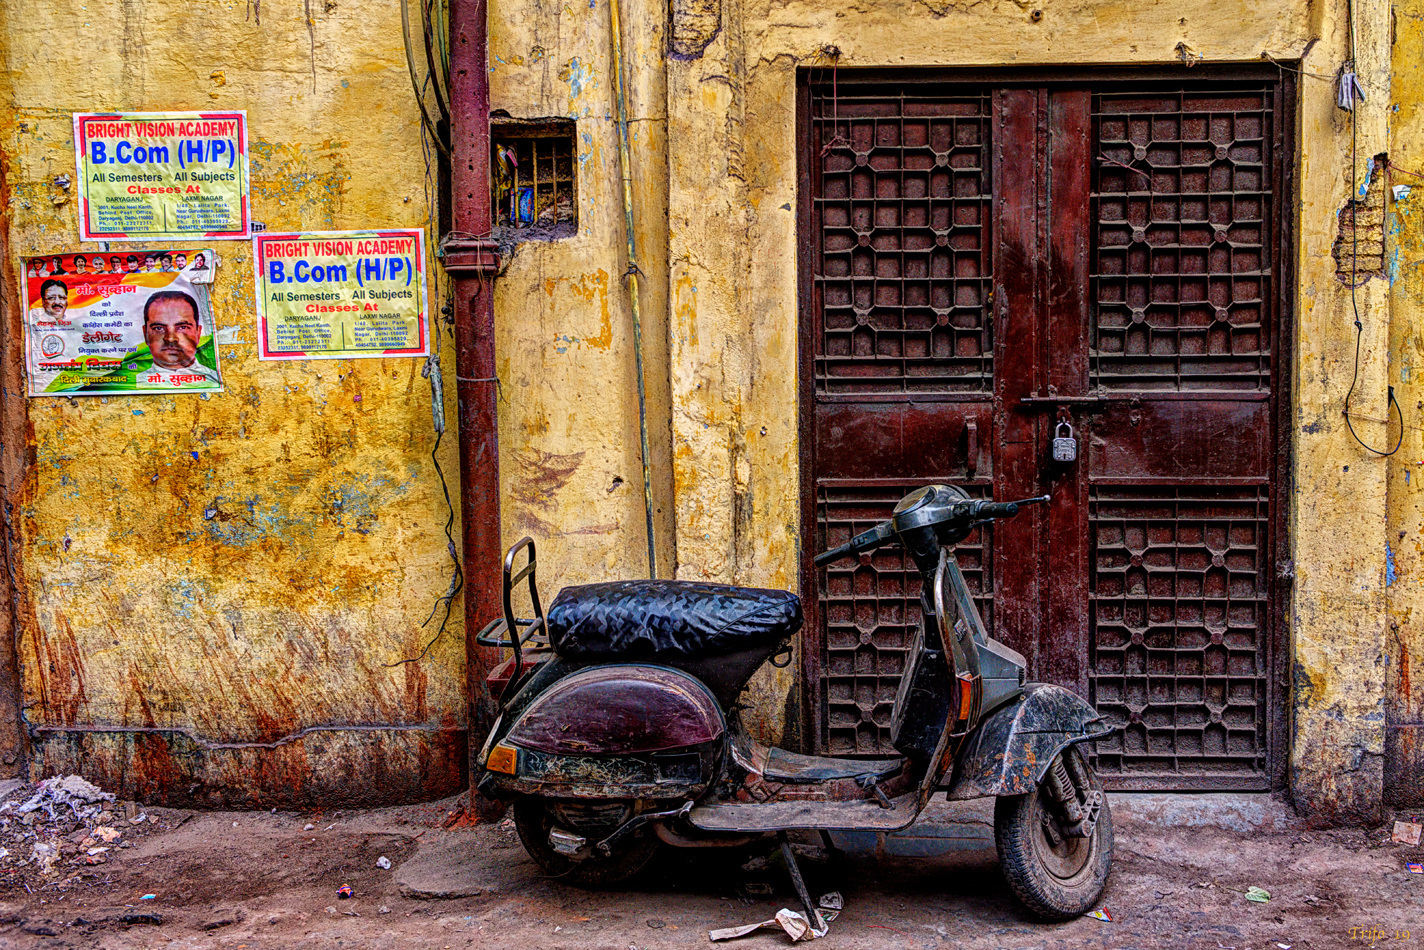 In the alleys of Old Delhi...